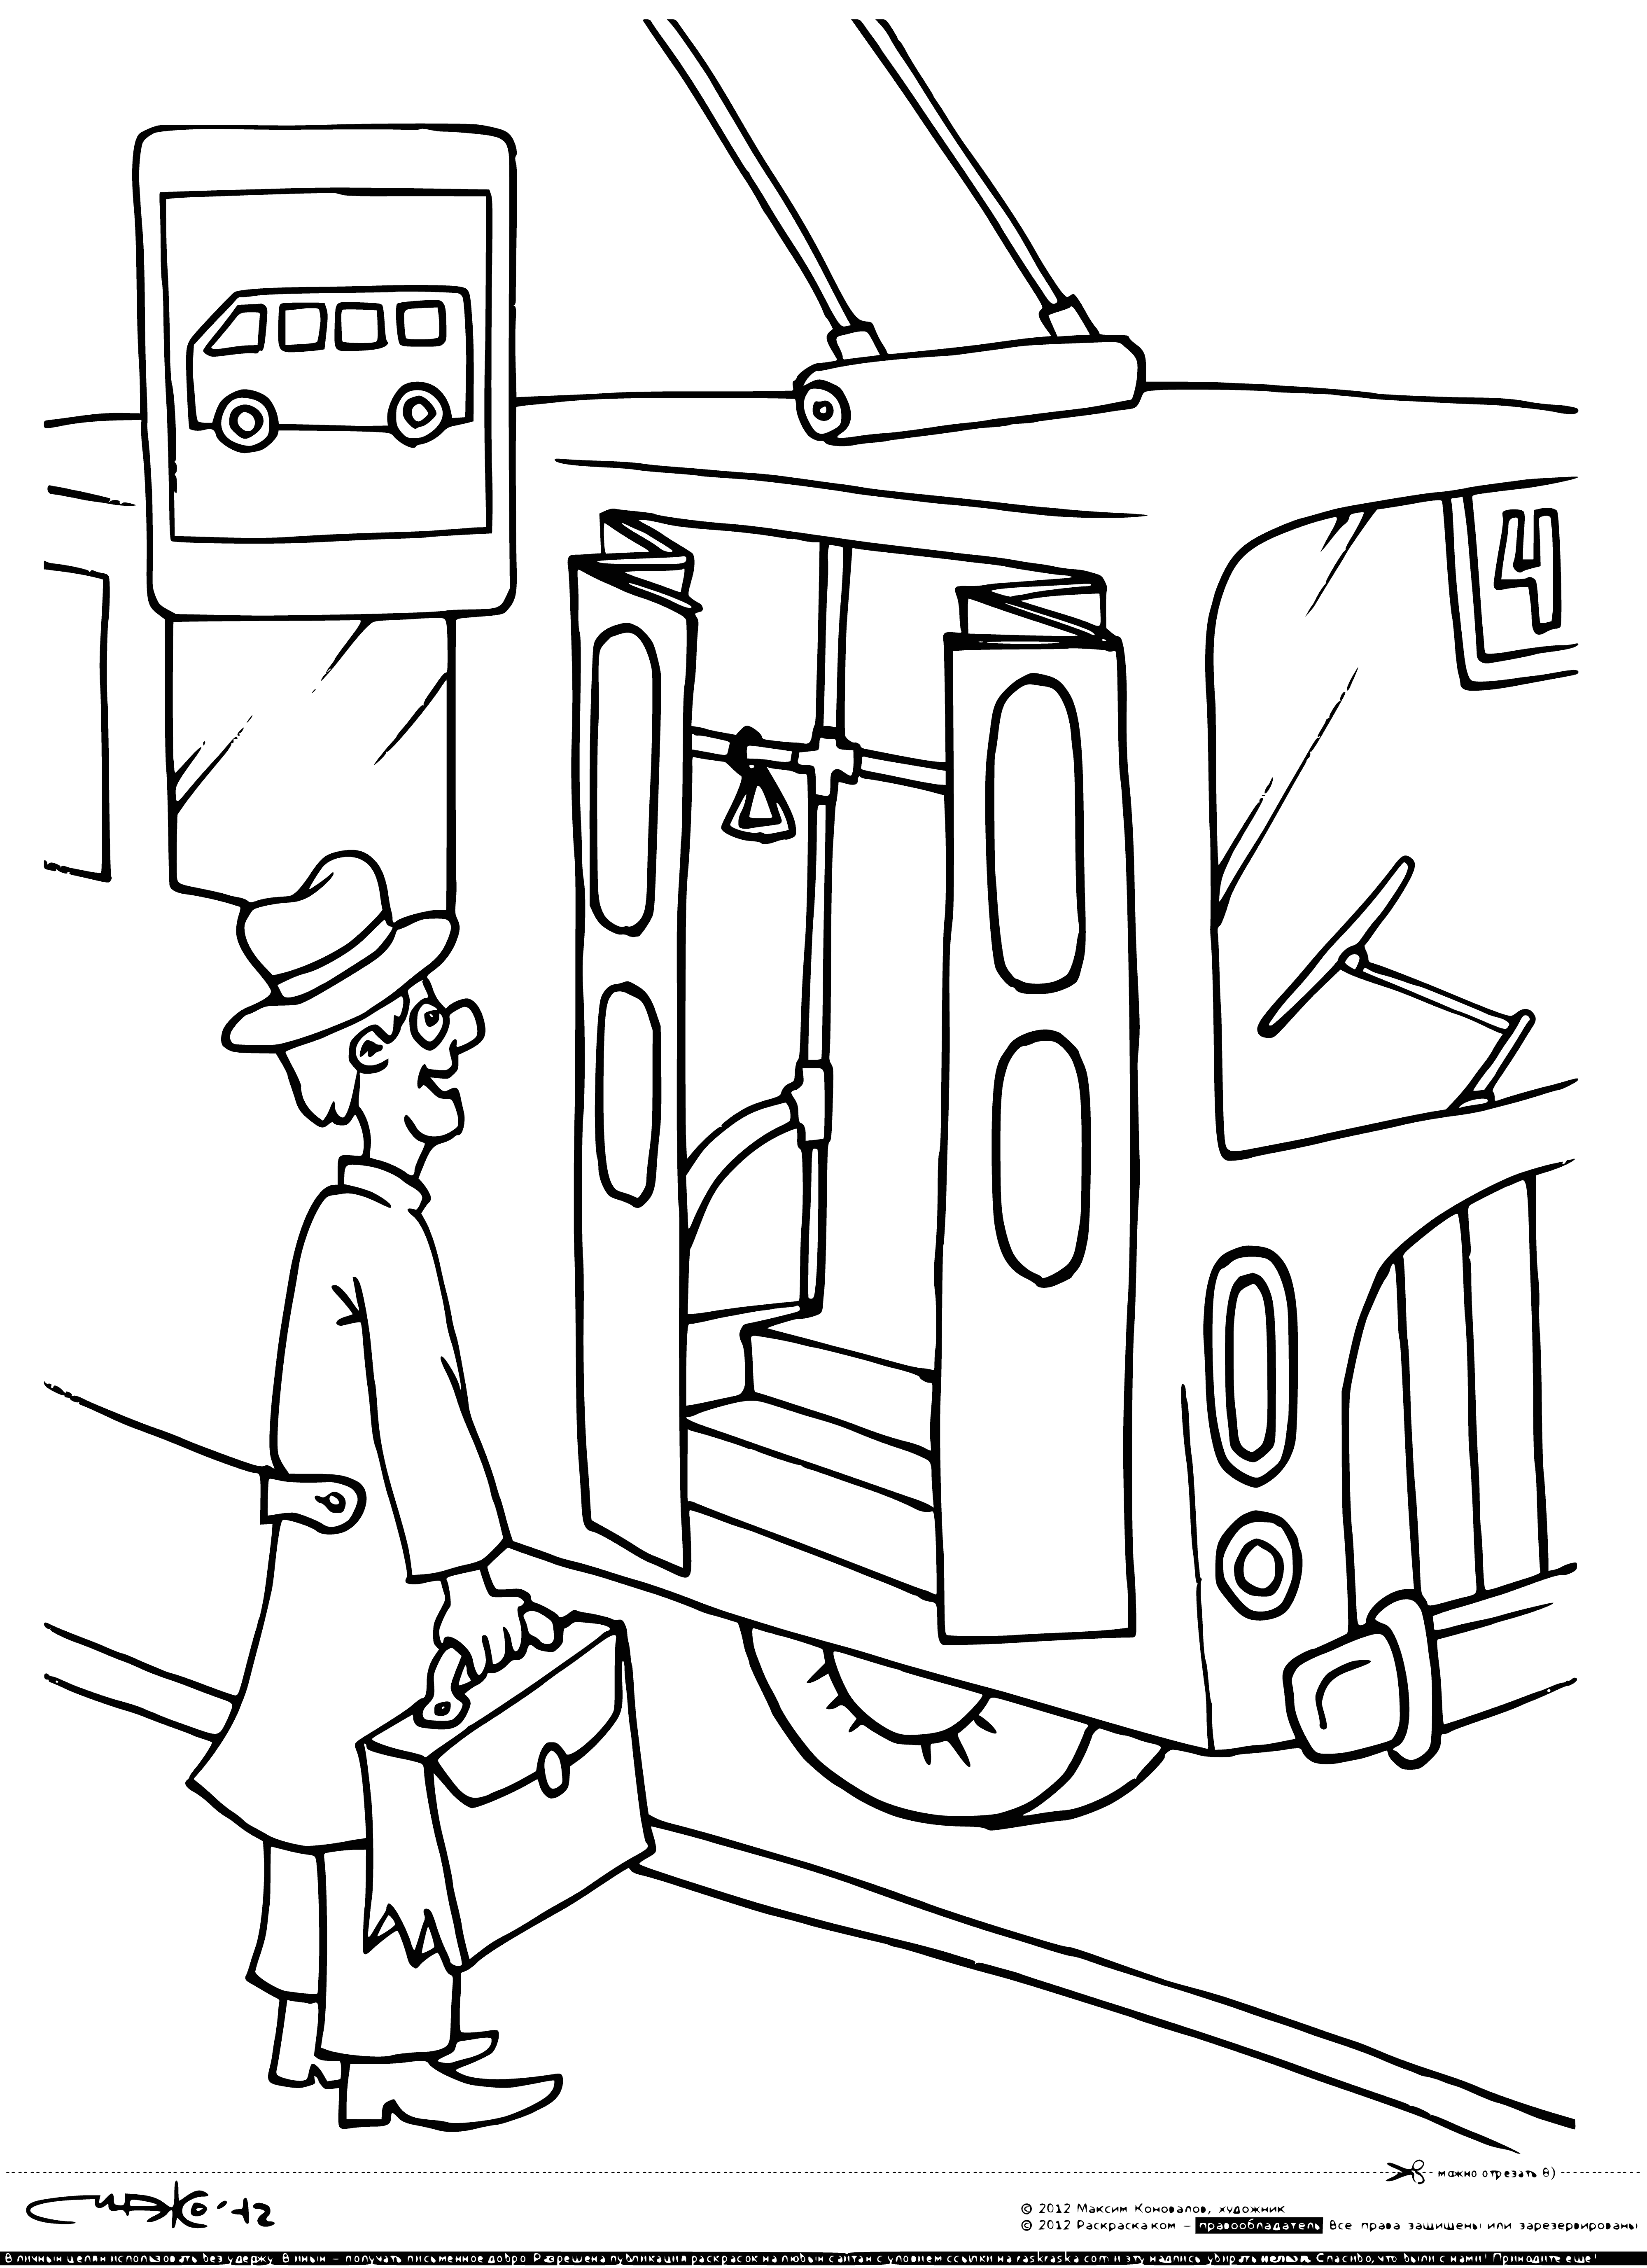 Otobüs (troleybüs) durağı boyama sayfası